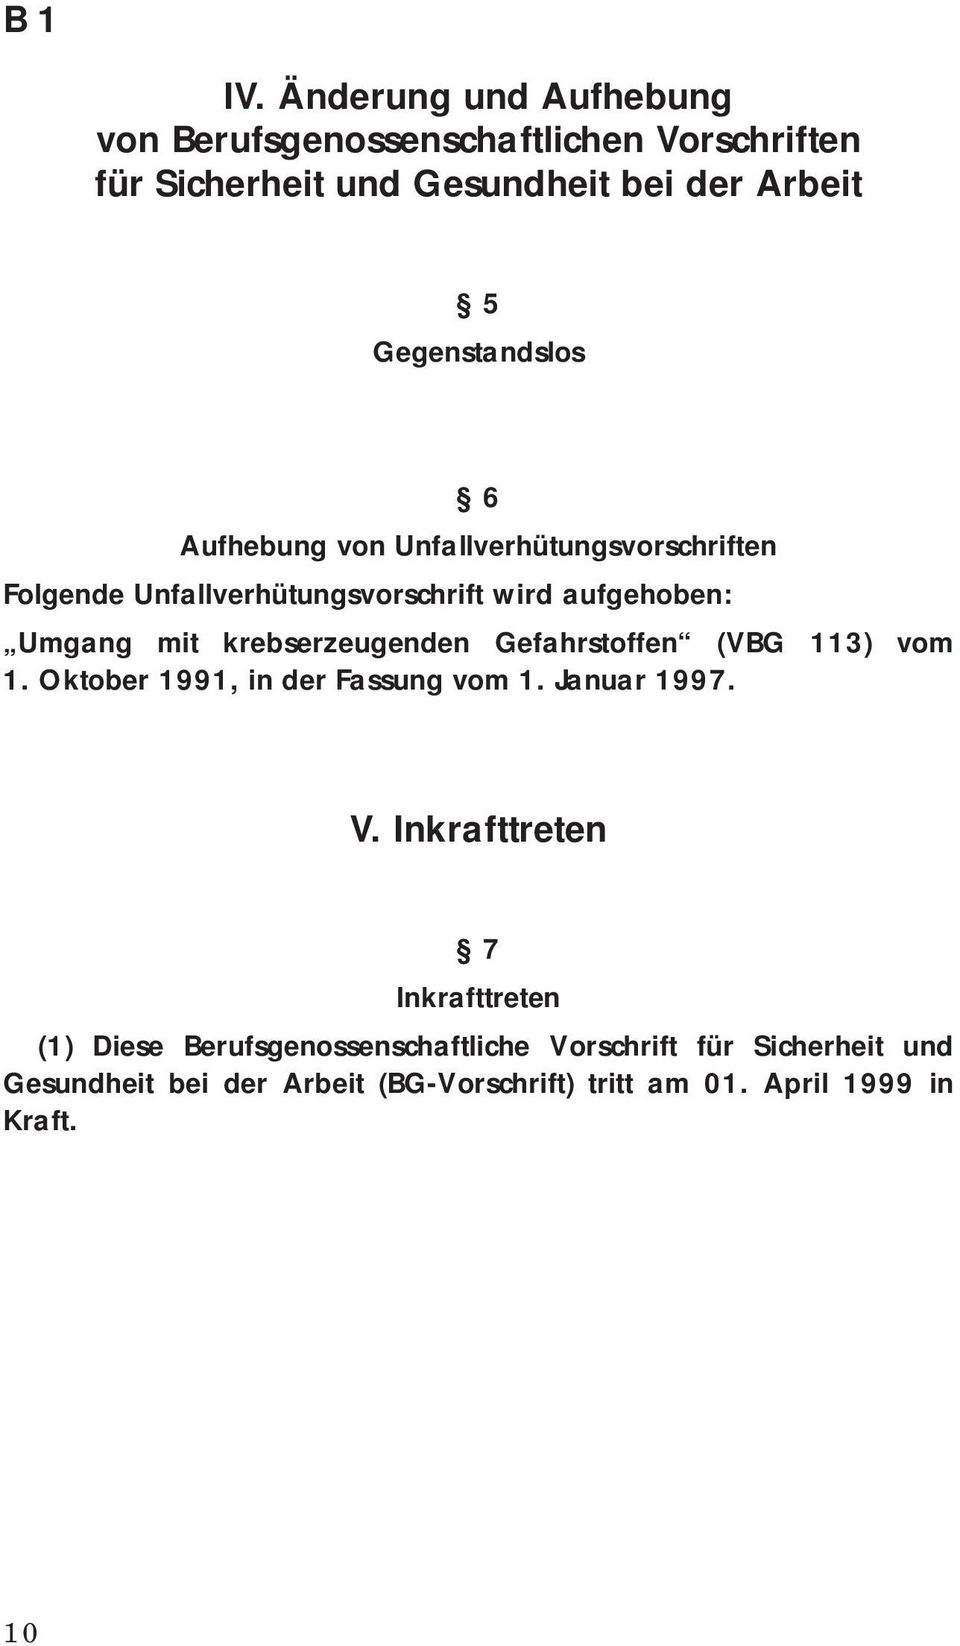 krebserzeugenden Gefahrstoffen (VBG 113) vom 1. Oktober 1991, in der Fassung vom 1. Januar 1997. V.